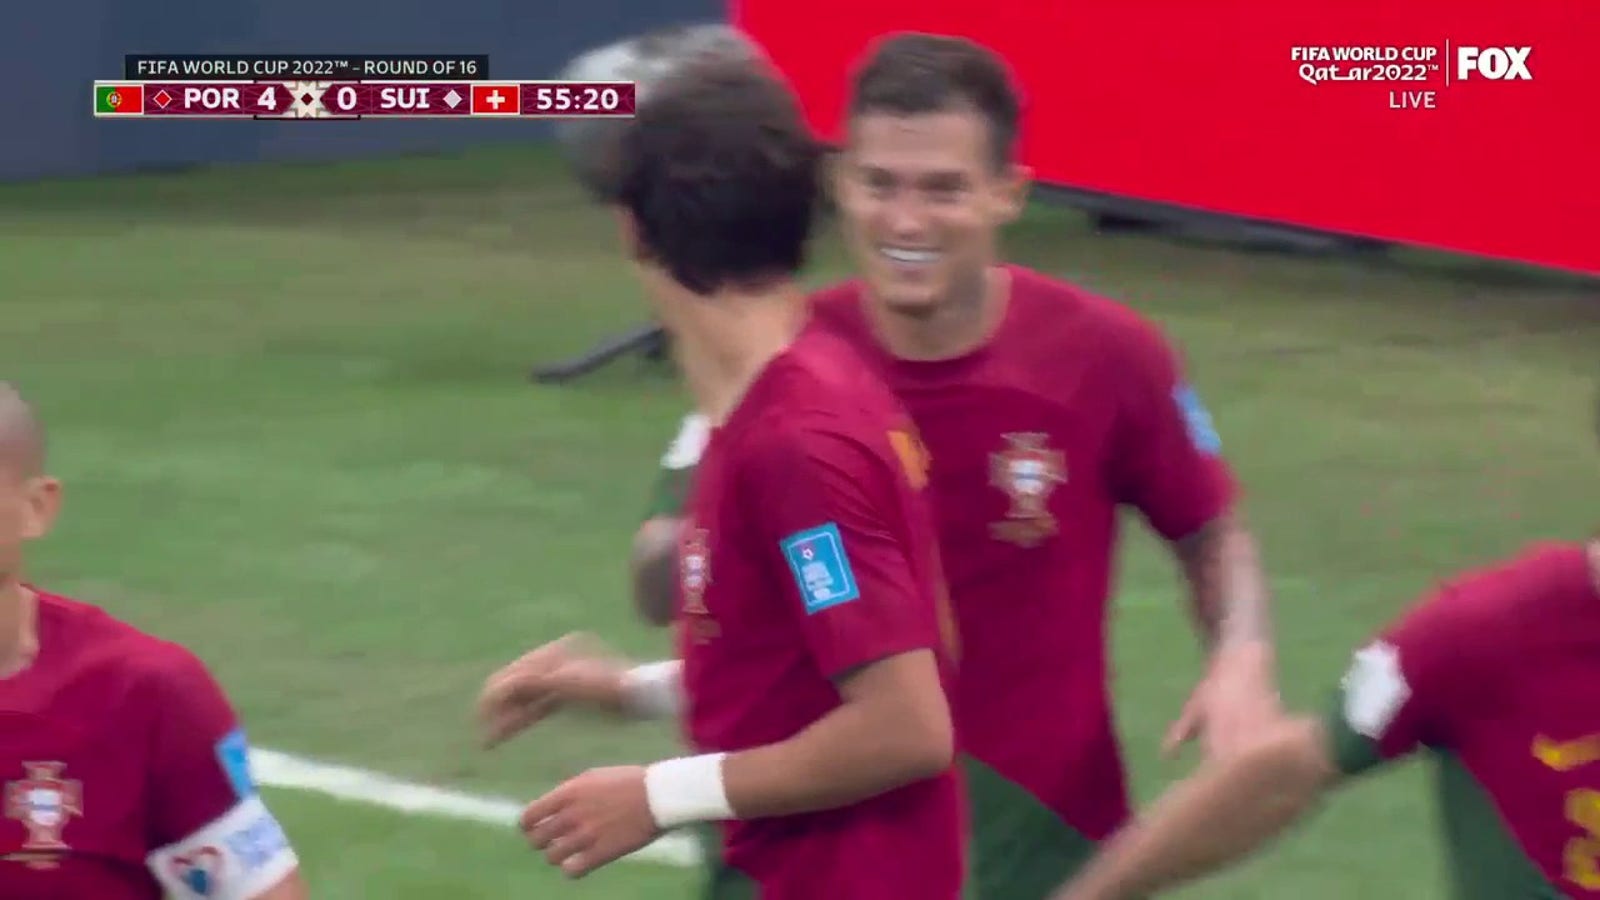 Portugal's Raphael Guerreiro scores goal vs. Switzerland in 55'